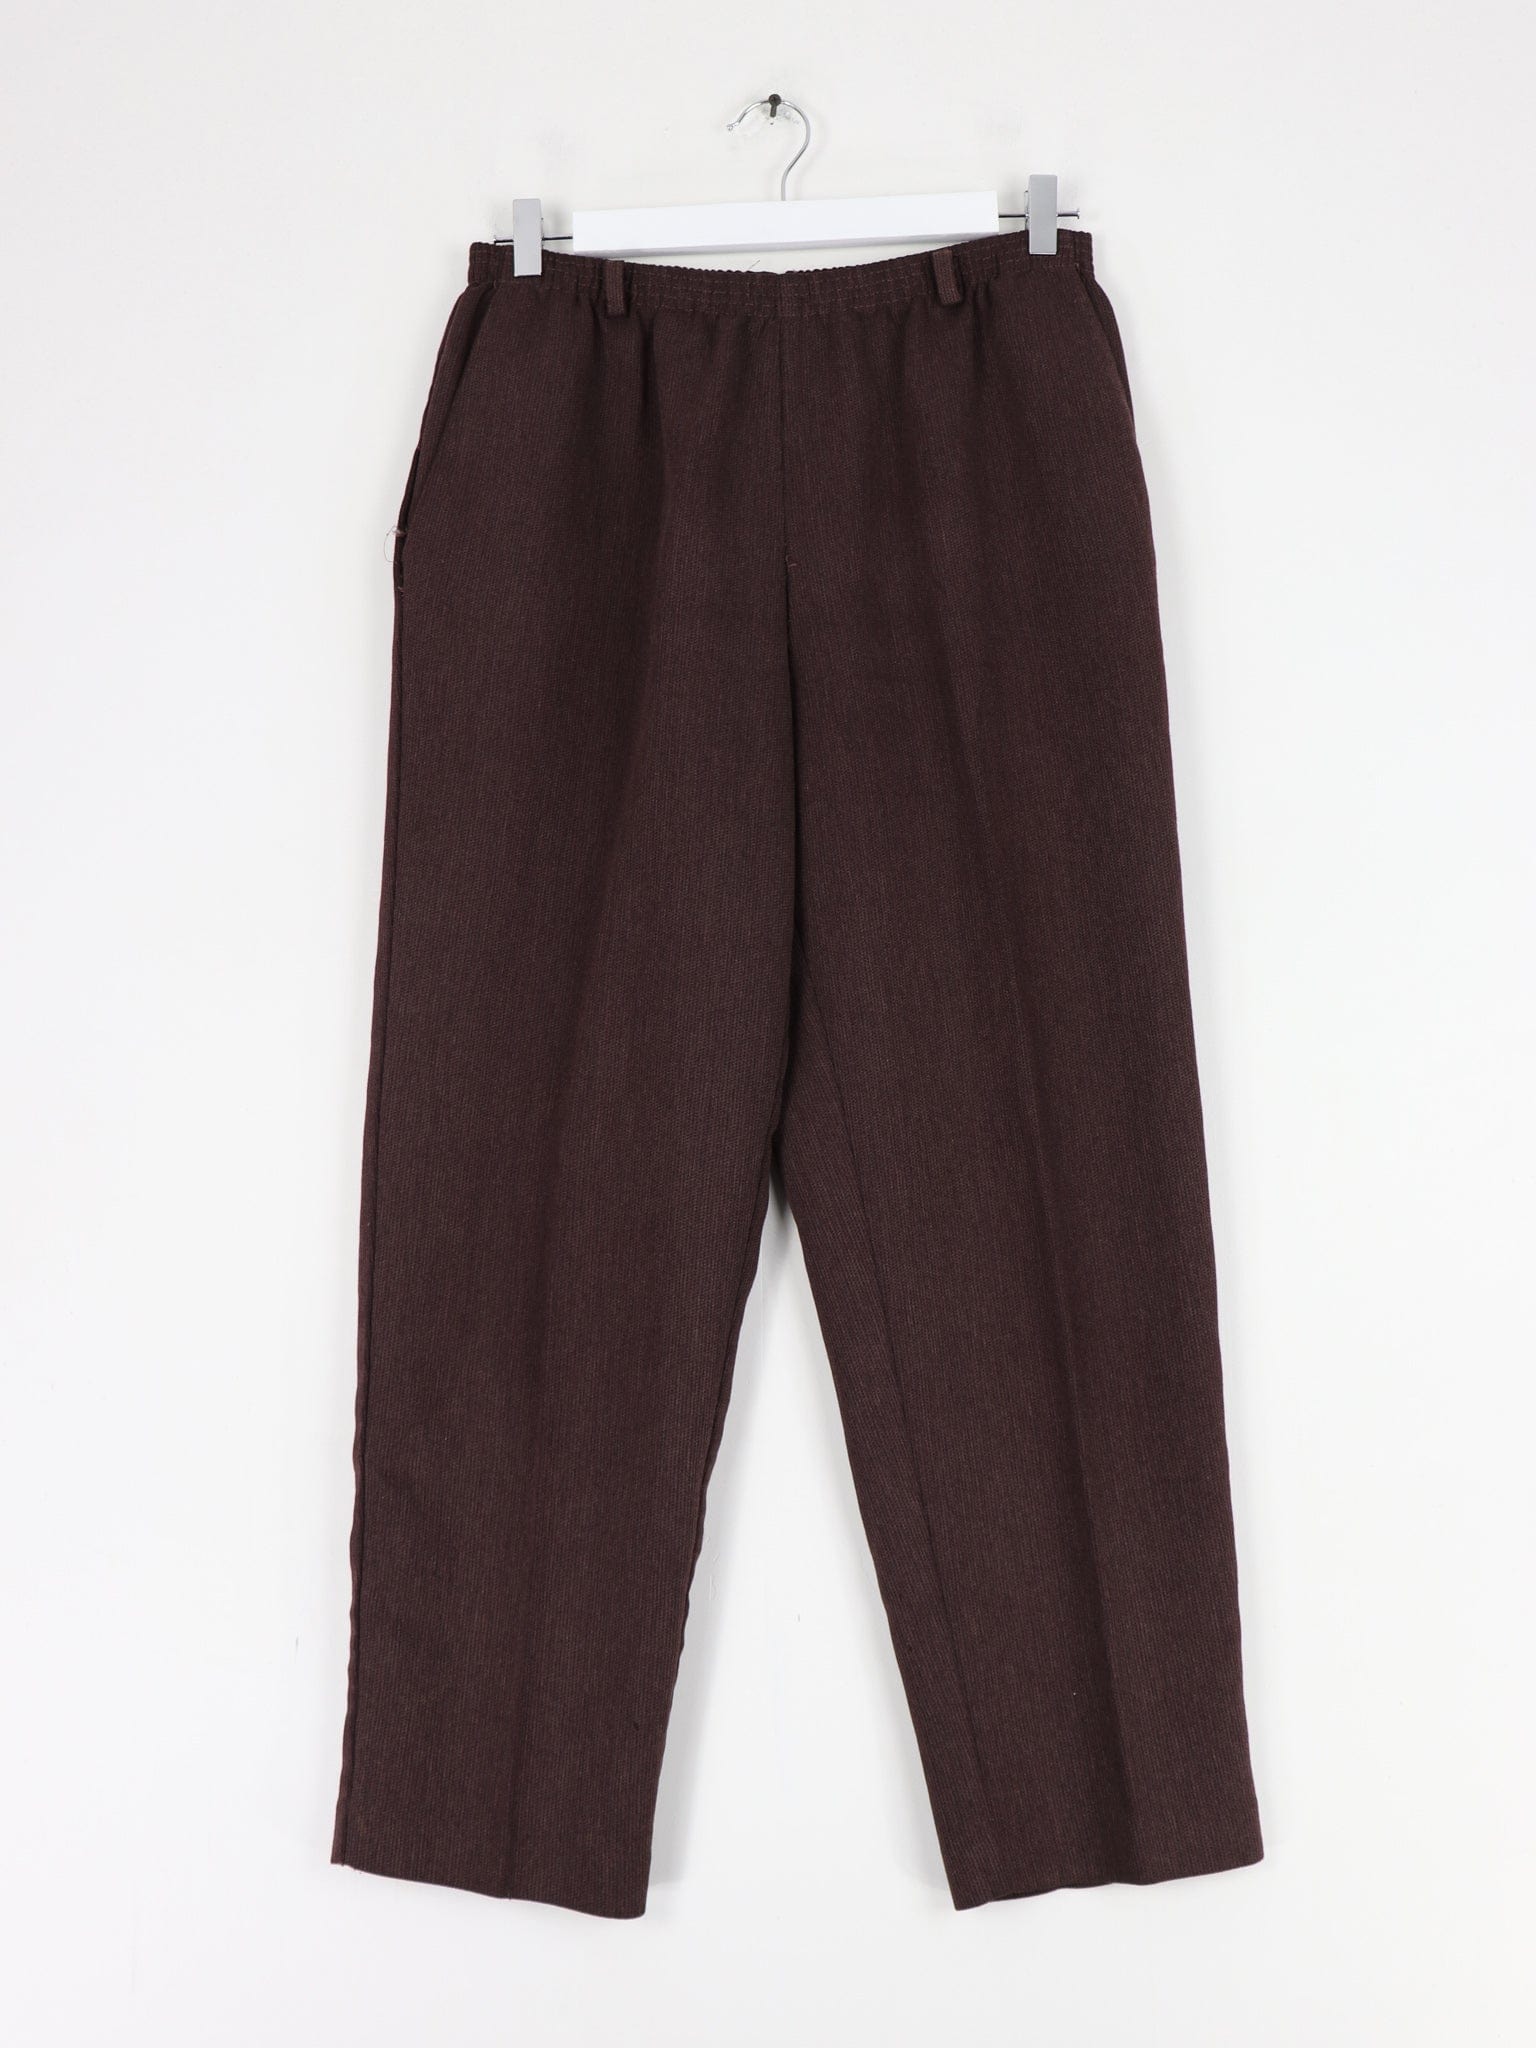 Alfred Dunner Fall Classics Sweater w/ Pull On Pants Plus Size  muratarakab.go.id